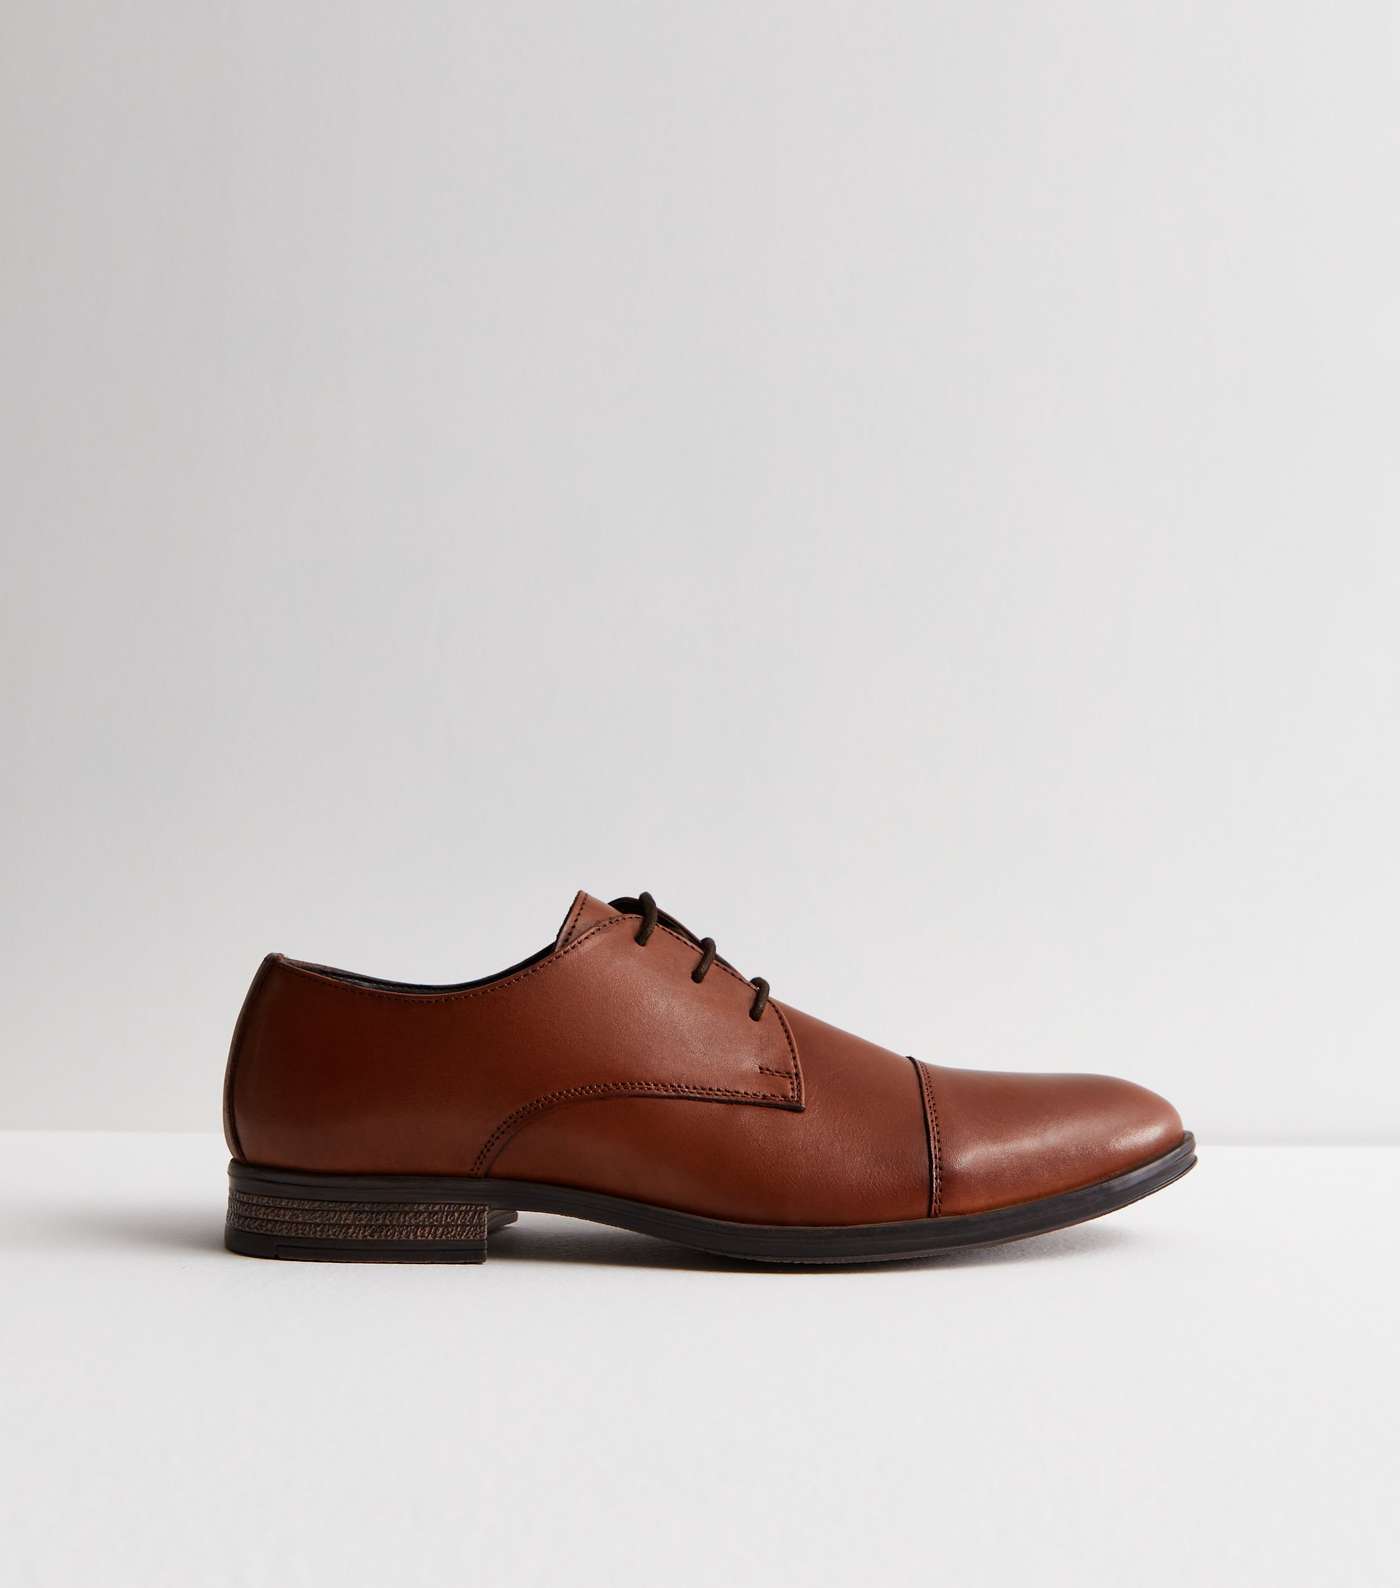 Jack & Jones Dark Brown Leather Oxford Shoes Image 3